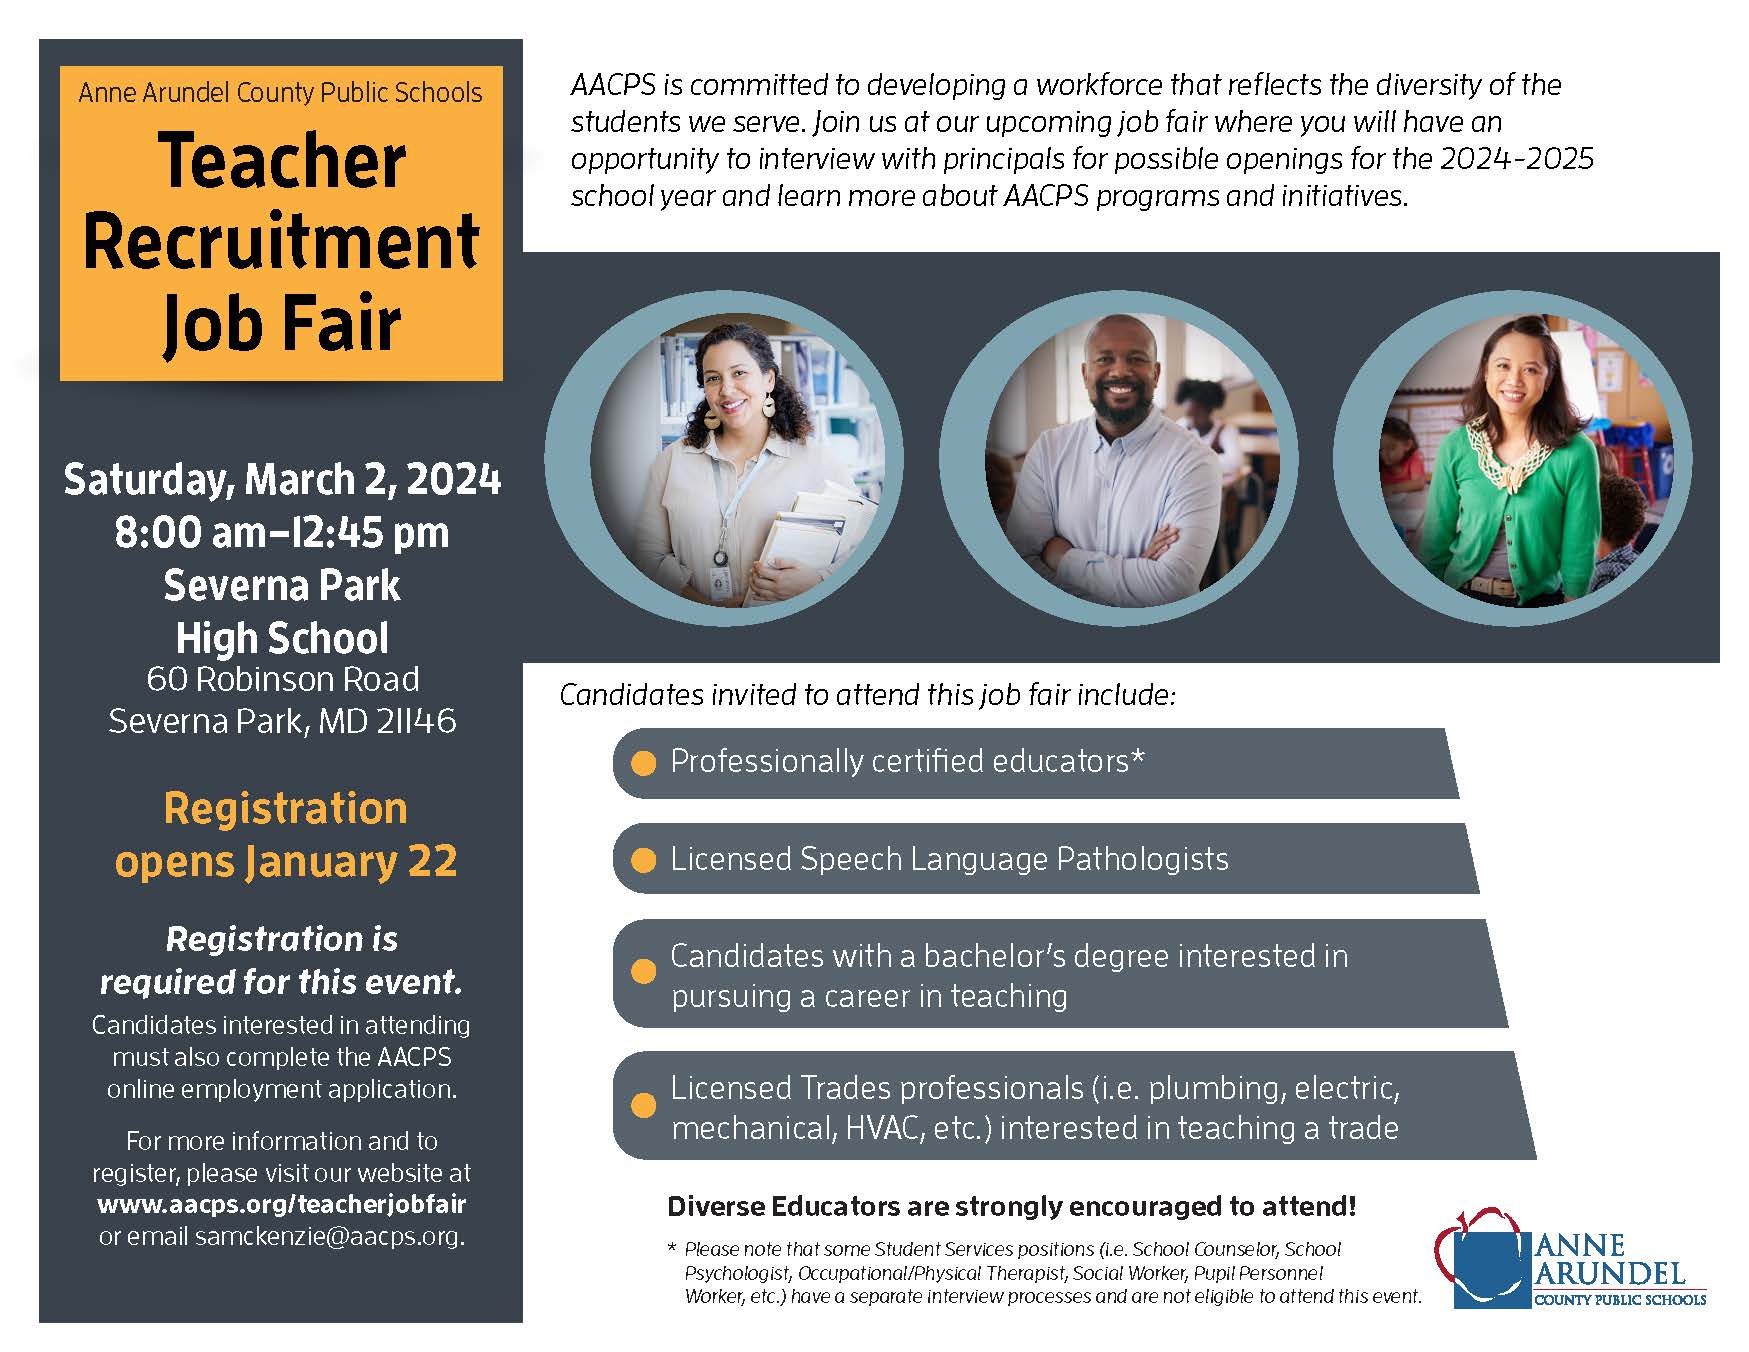 Anne Arundel County Public Schools Teacher Recruitment Job Fair, Saturday, March 2, 2024, 8:00 am to 12:45 pm, Severna Park High School